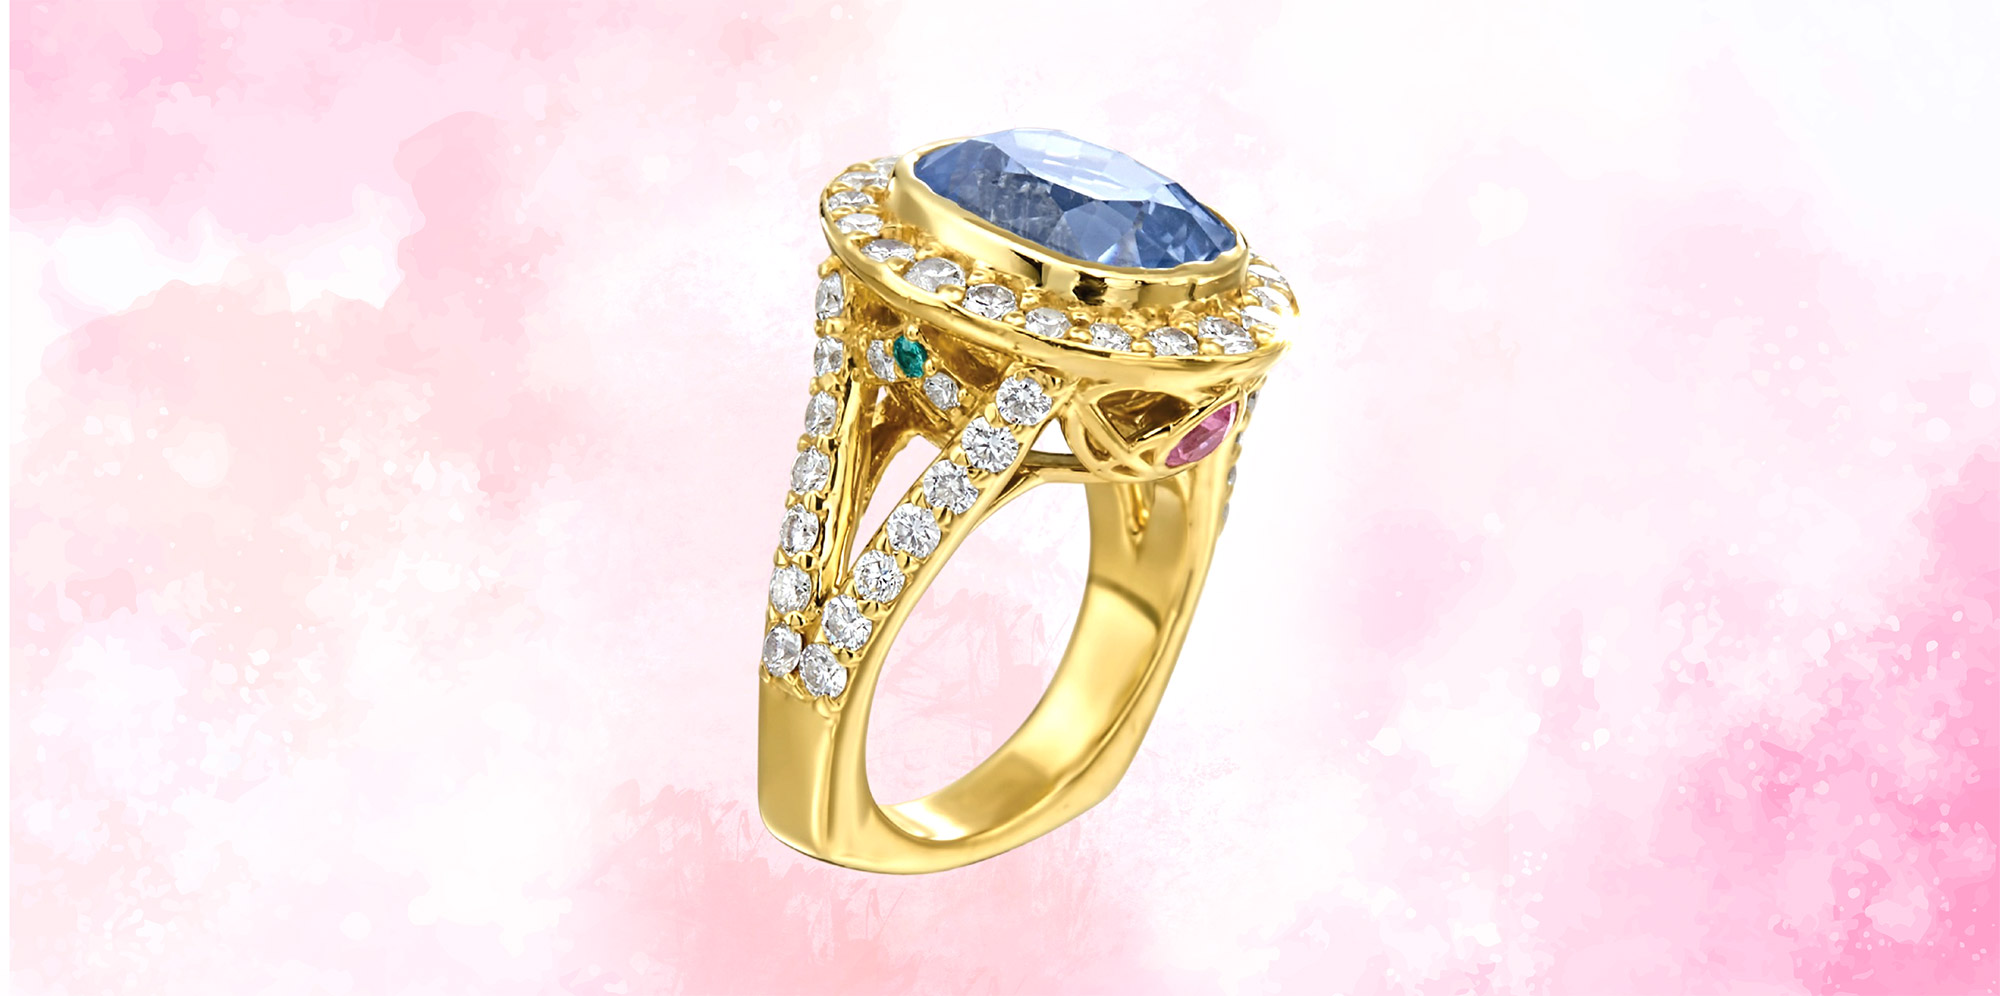 Custom Ceylon Sapphire and diamond ring designed by David Gardner